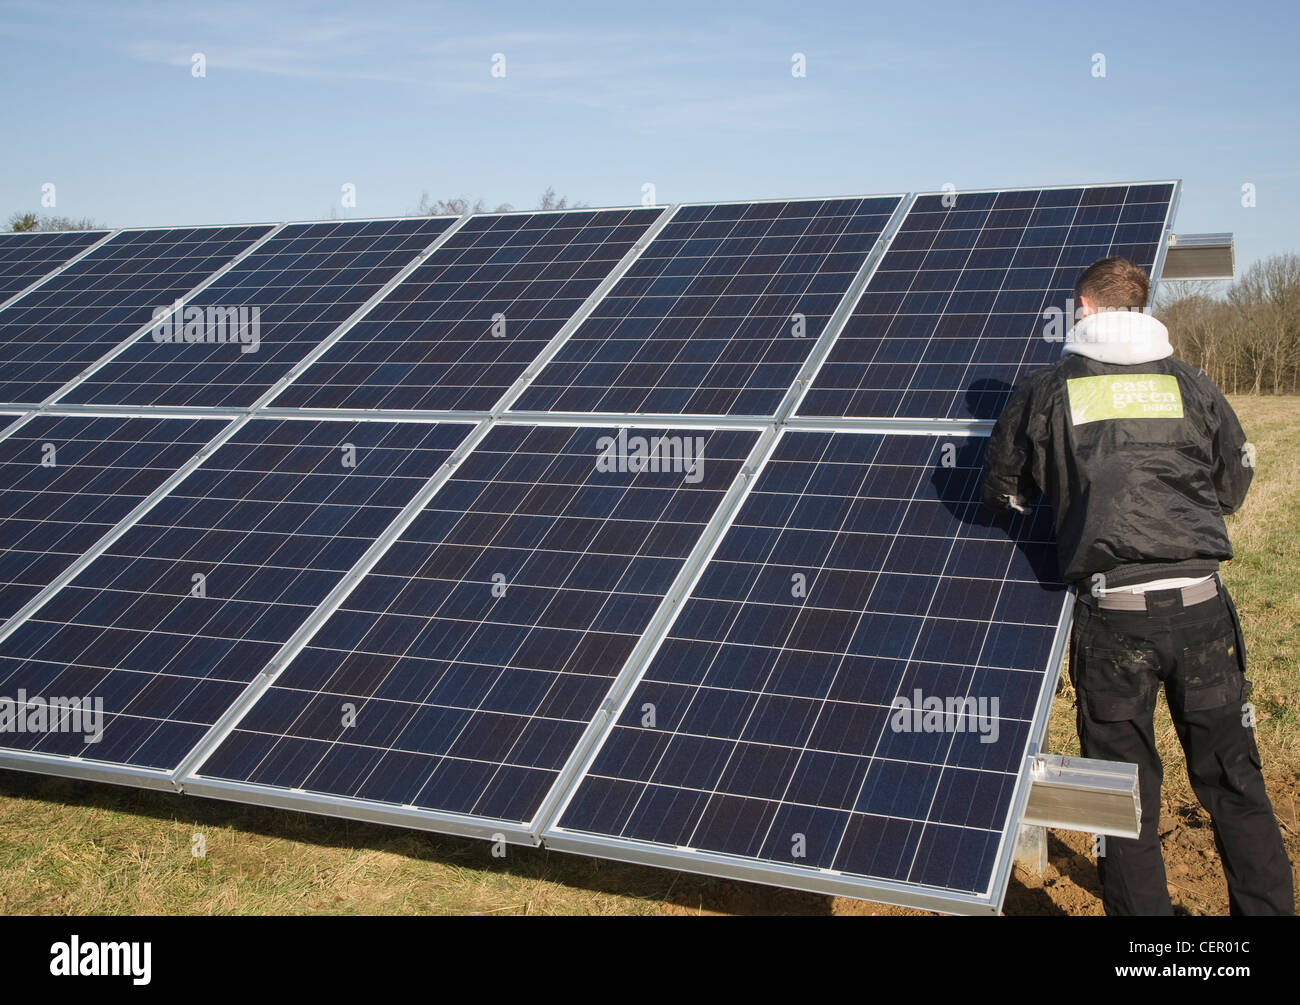 Construction new photovoltaic solar energy array system, Suffolk, England Stock Photo